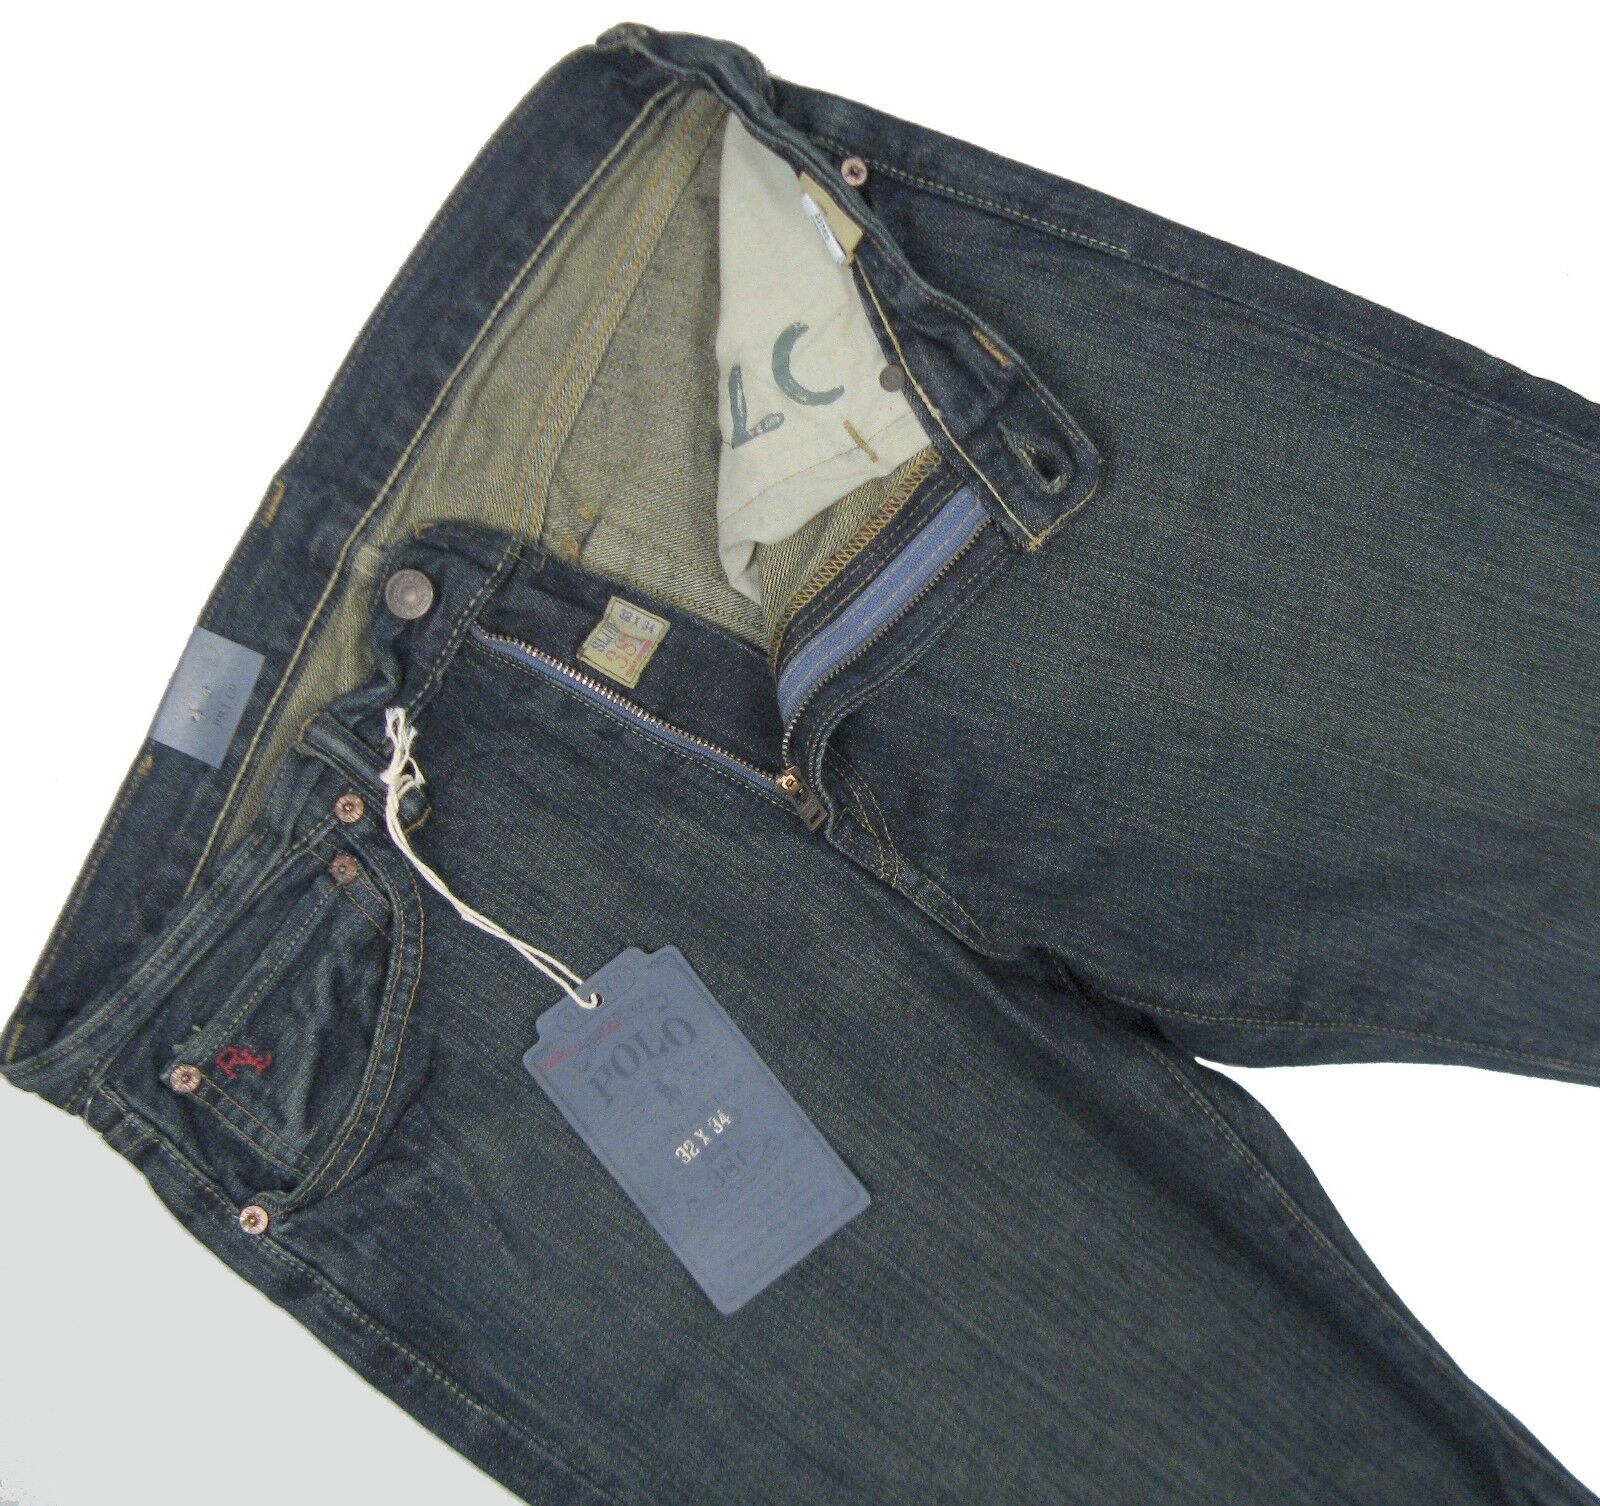 privacy kubus convergentie NEW Polo Ralph Lauren Slim 381 Jeans! *Darker Wash* Zip Fly Red RL on Pocket